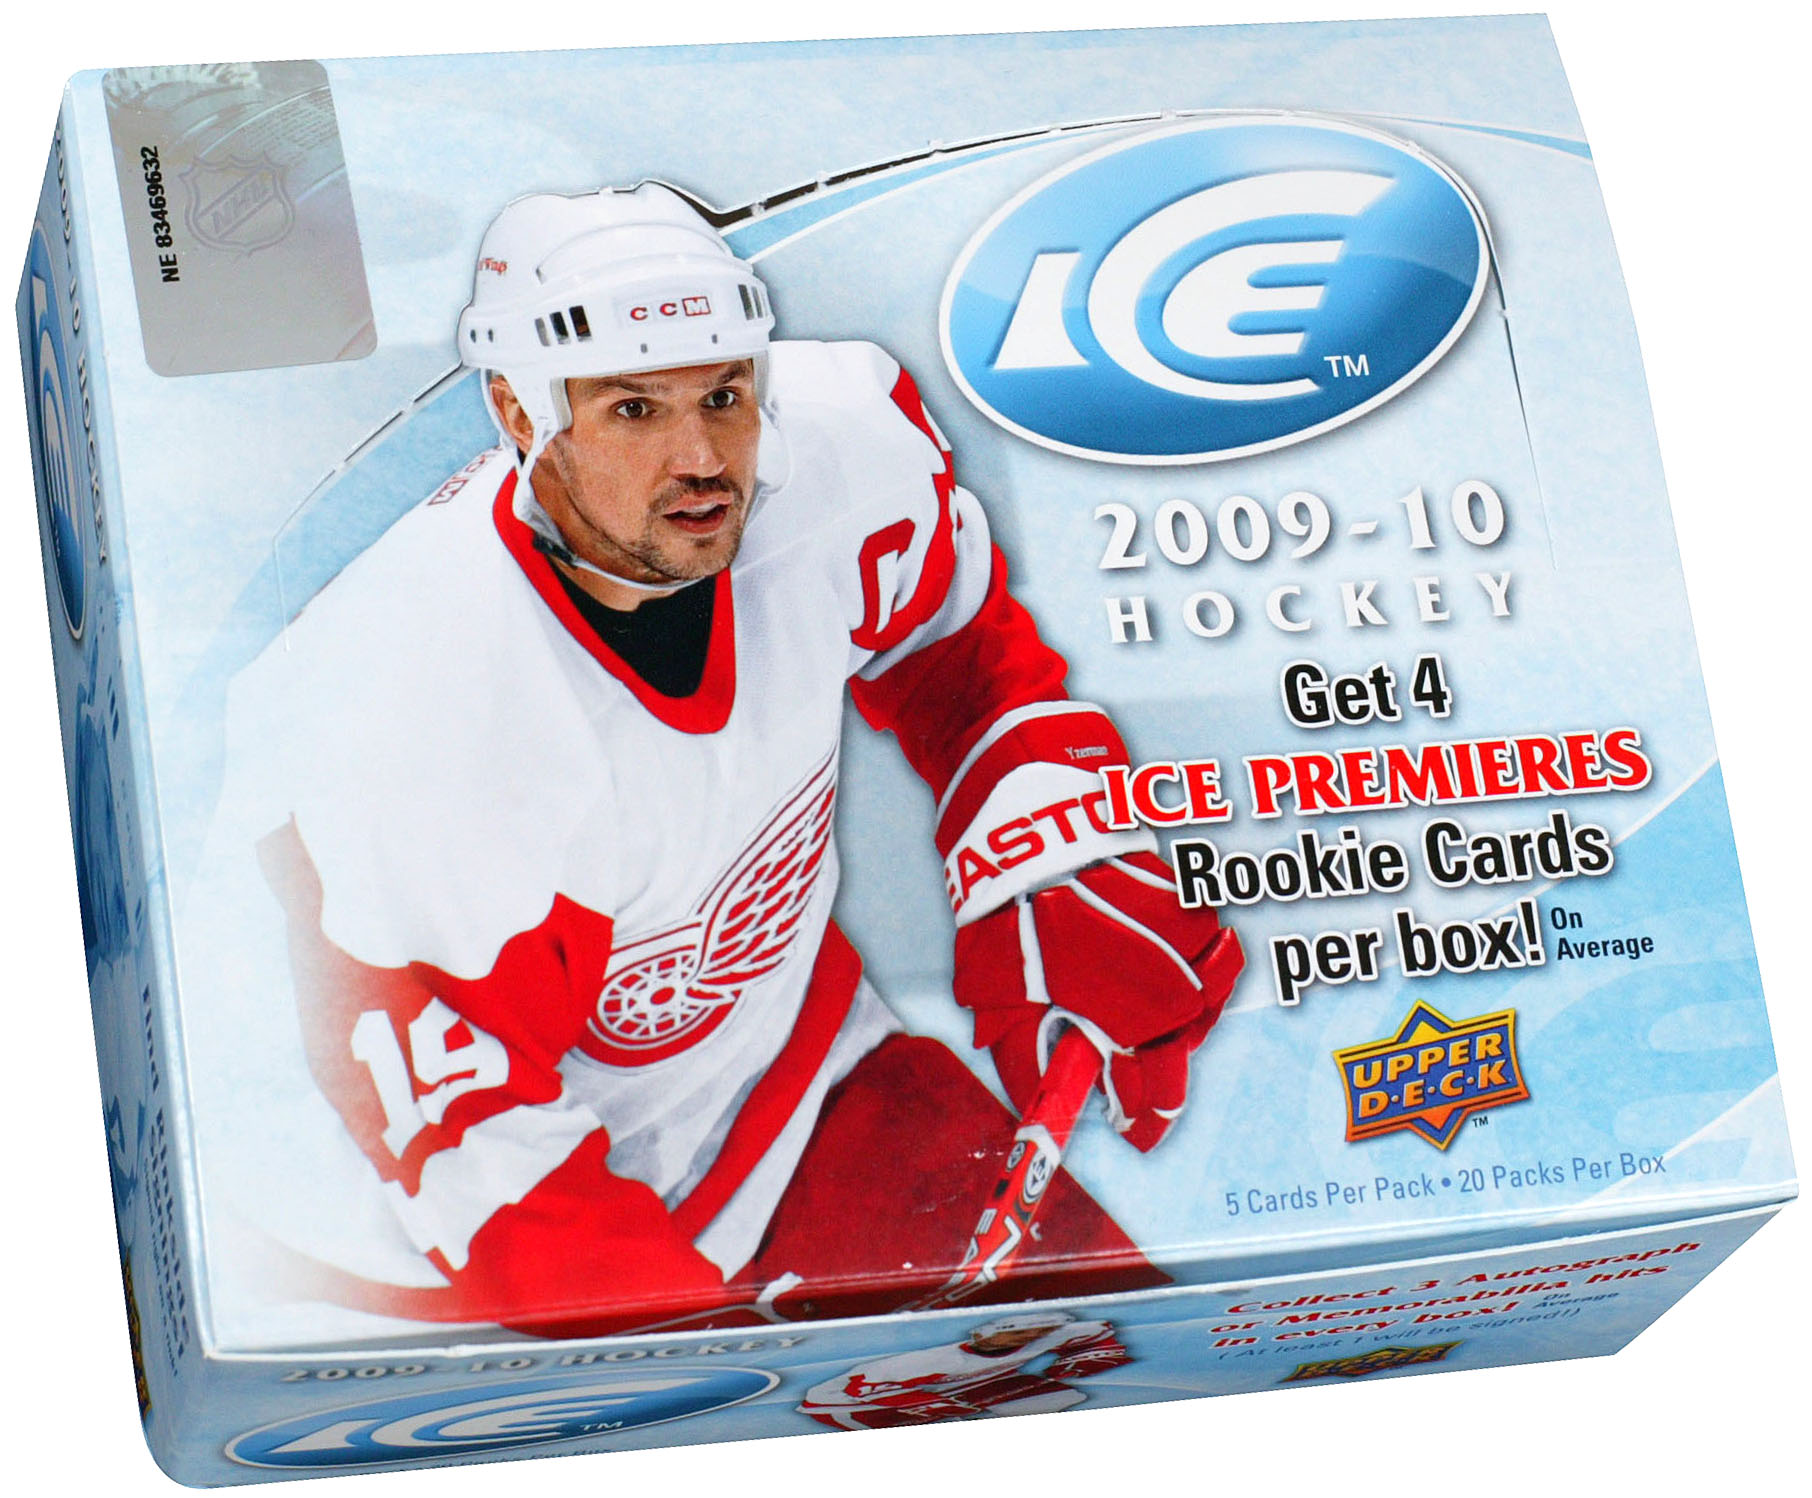 2009-10 Upper Deck Ice Hockey Hobby Box card image